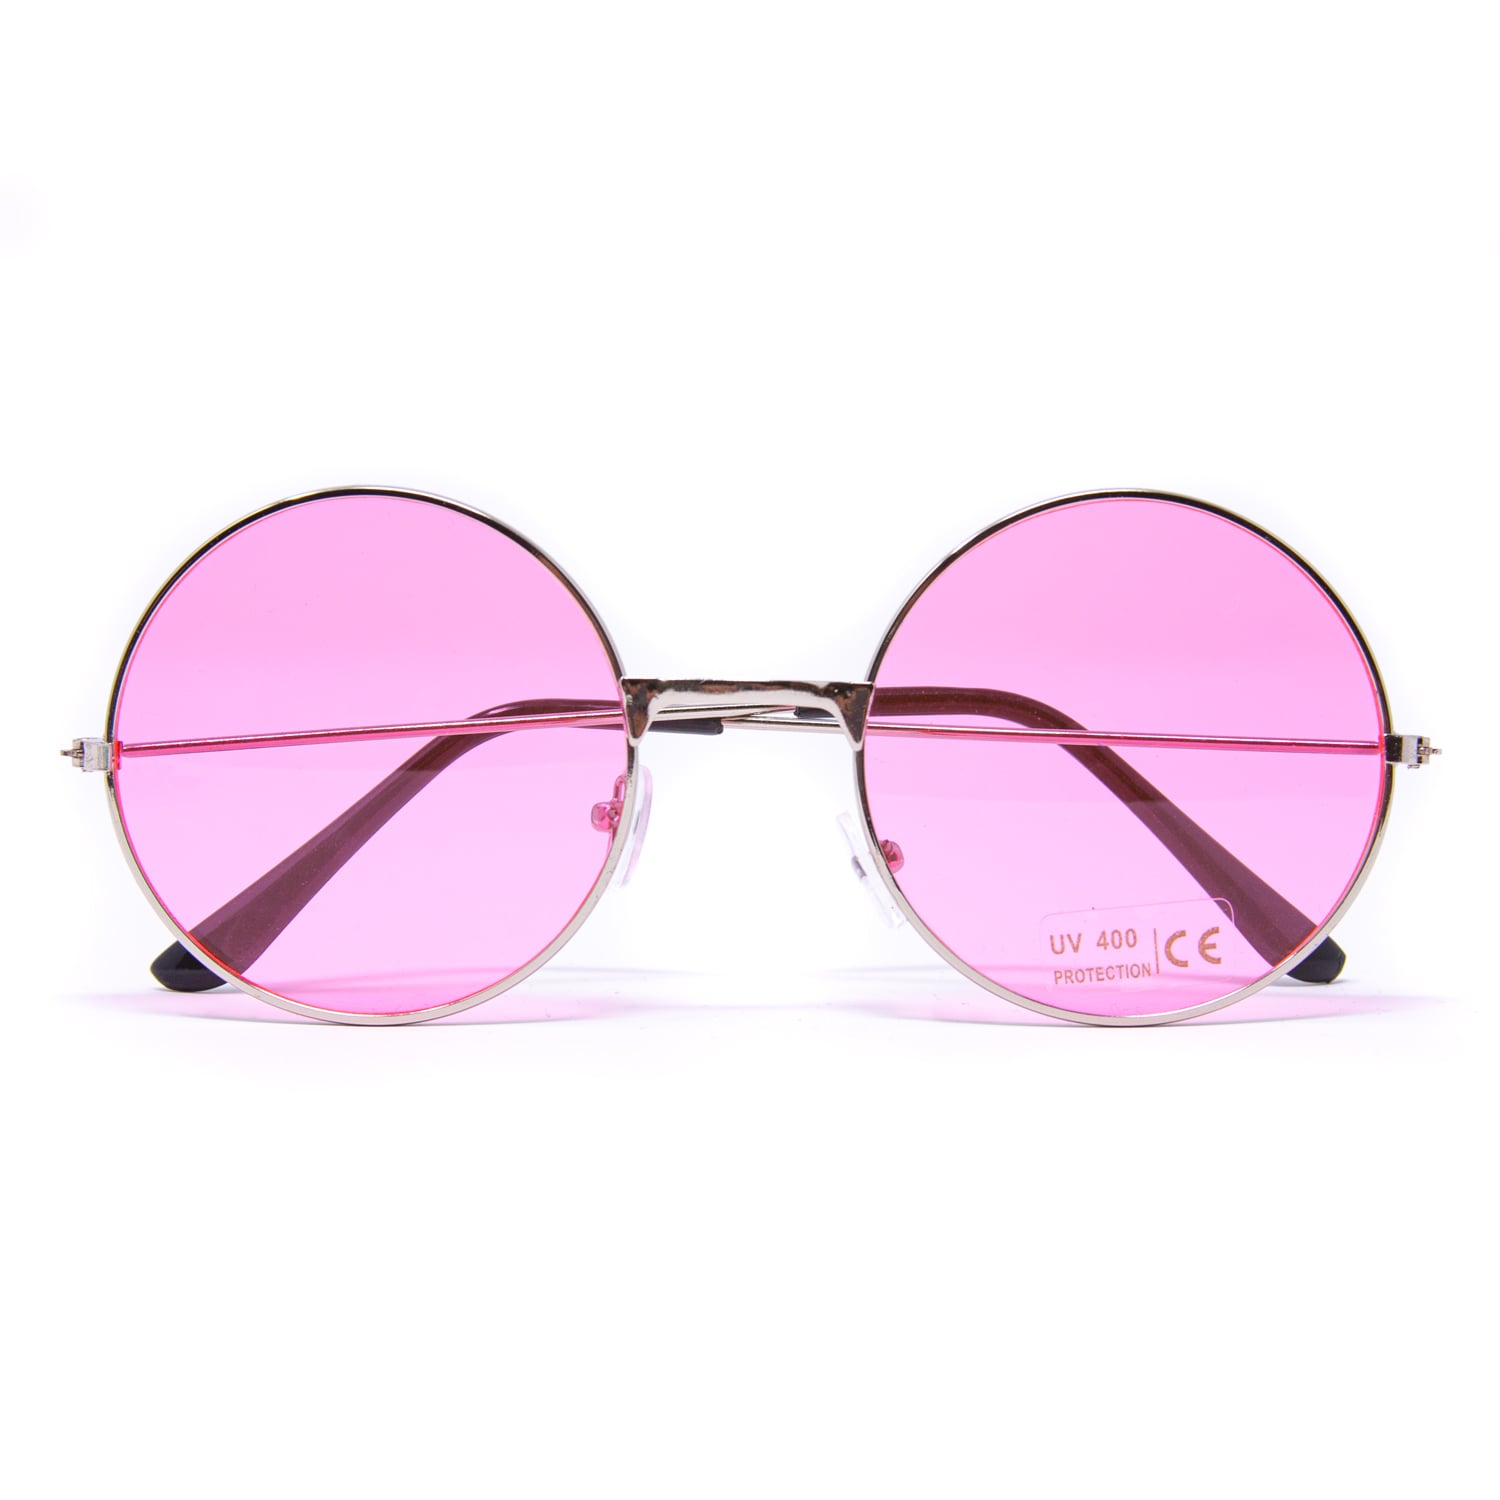 VIU Sonnenbrille in Rosa Accessoires Sonnenbrillen Retro Brillen 